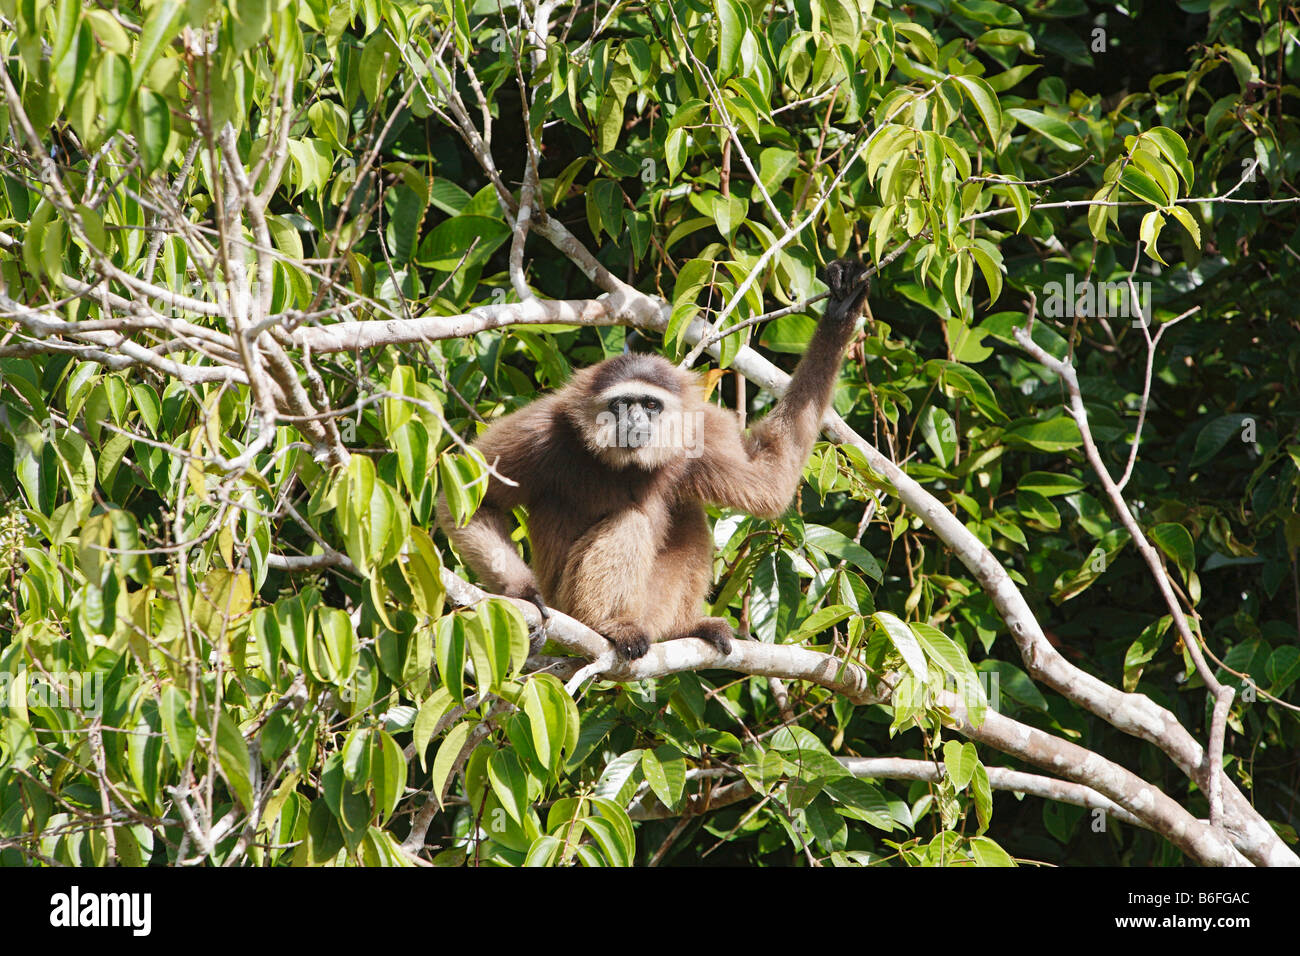 El Gibón ágil o gibón de Mano Negra (Hylobates agilis), primate, Samboja, Kalimantan Oriental / Kalimantan Timur, Borneo, Indonesia Foto de stock